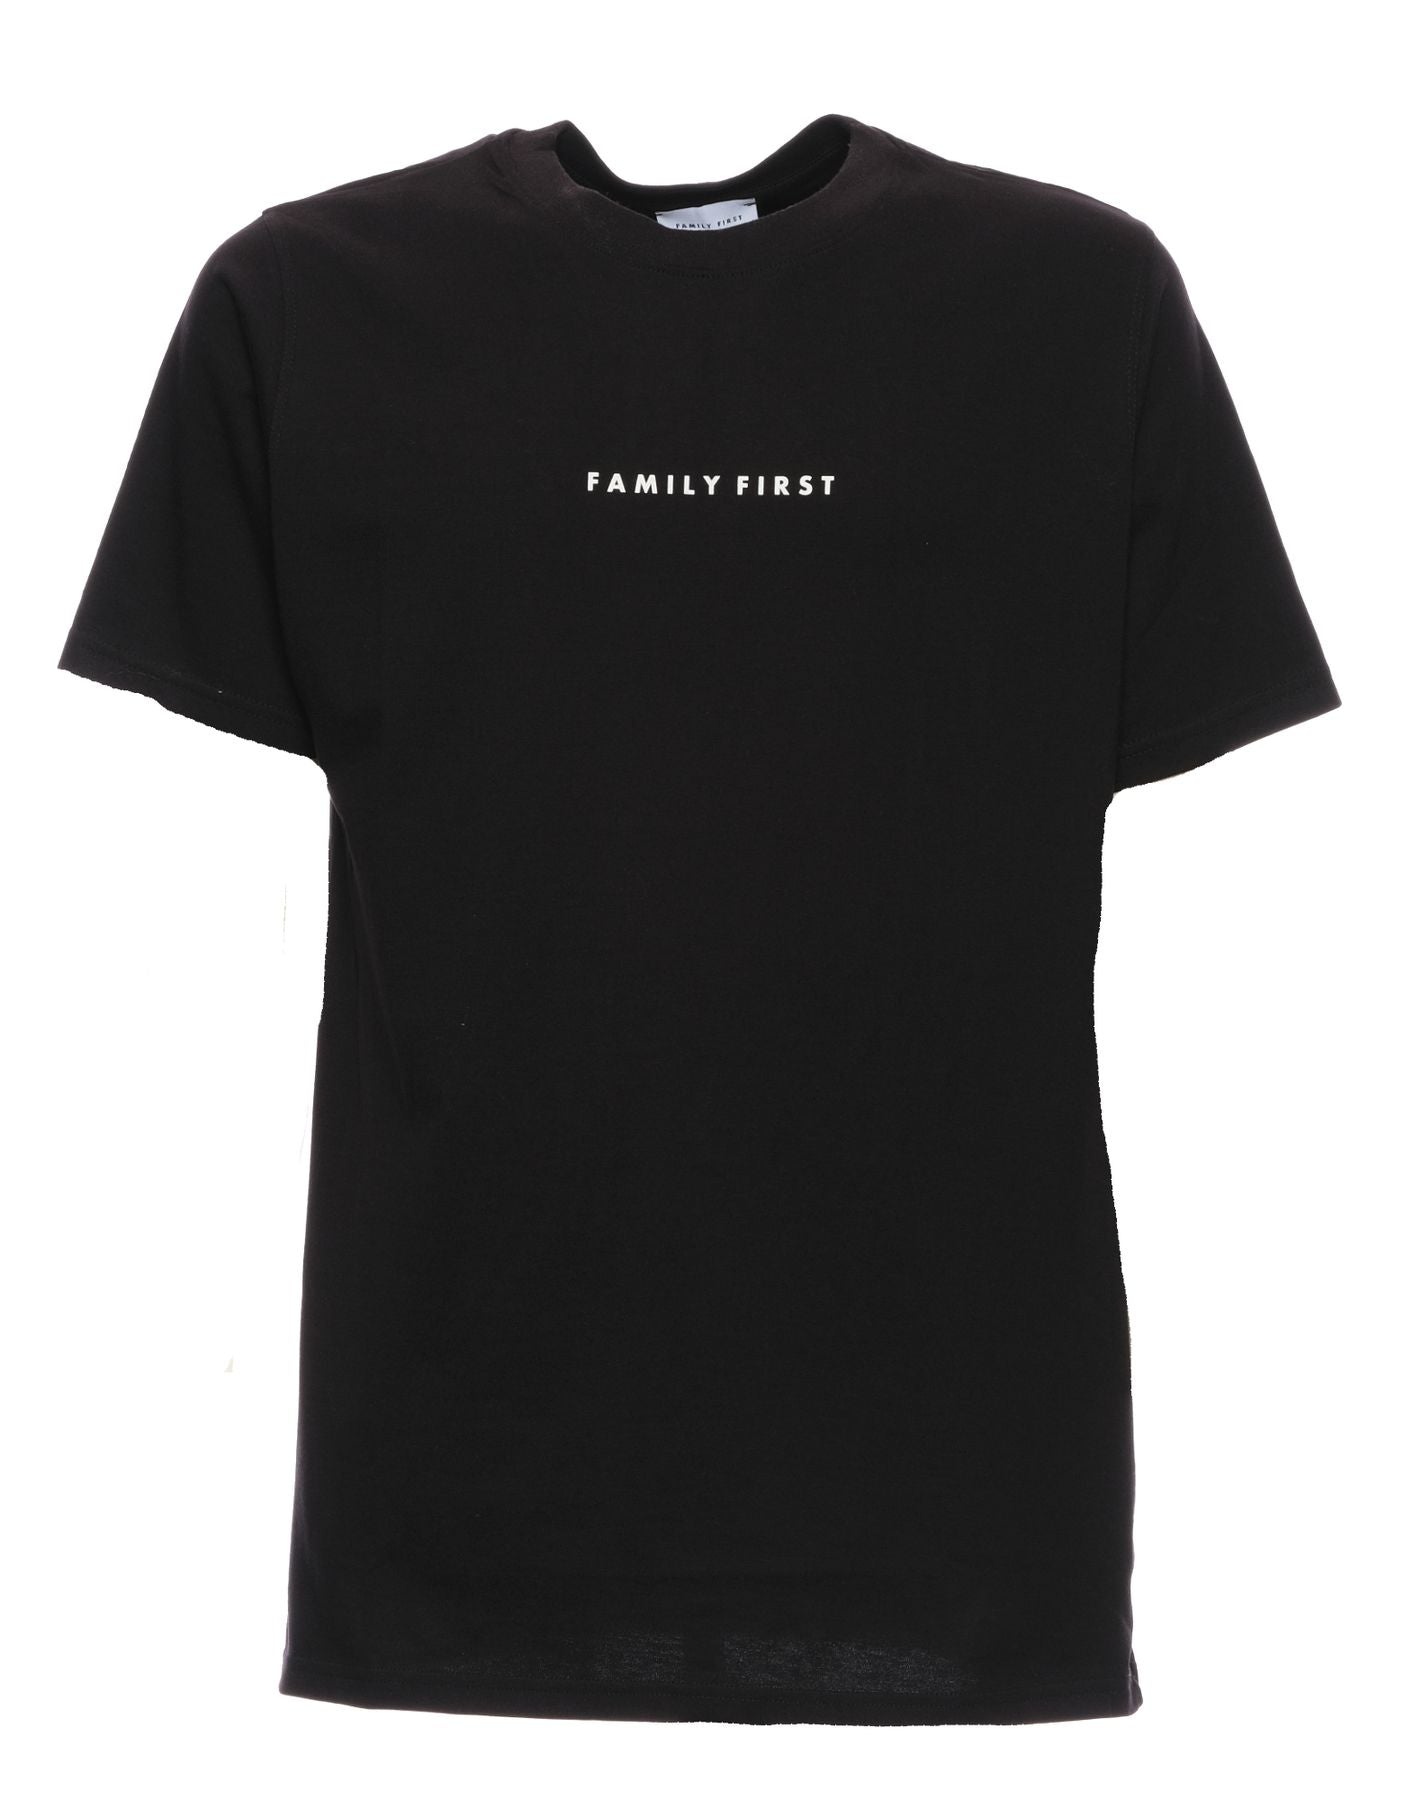 T-shirt for man BOX LOGO BLACK Family First